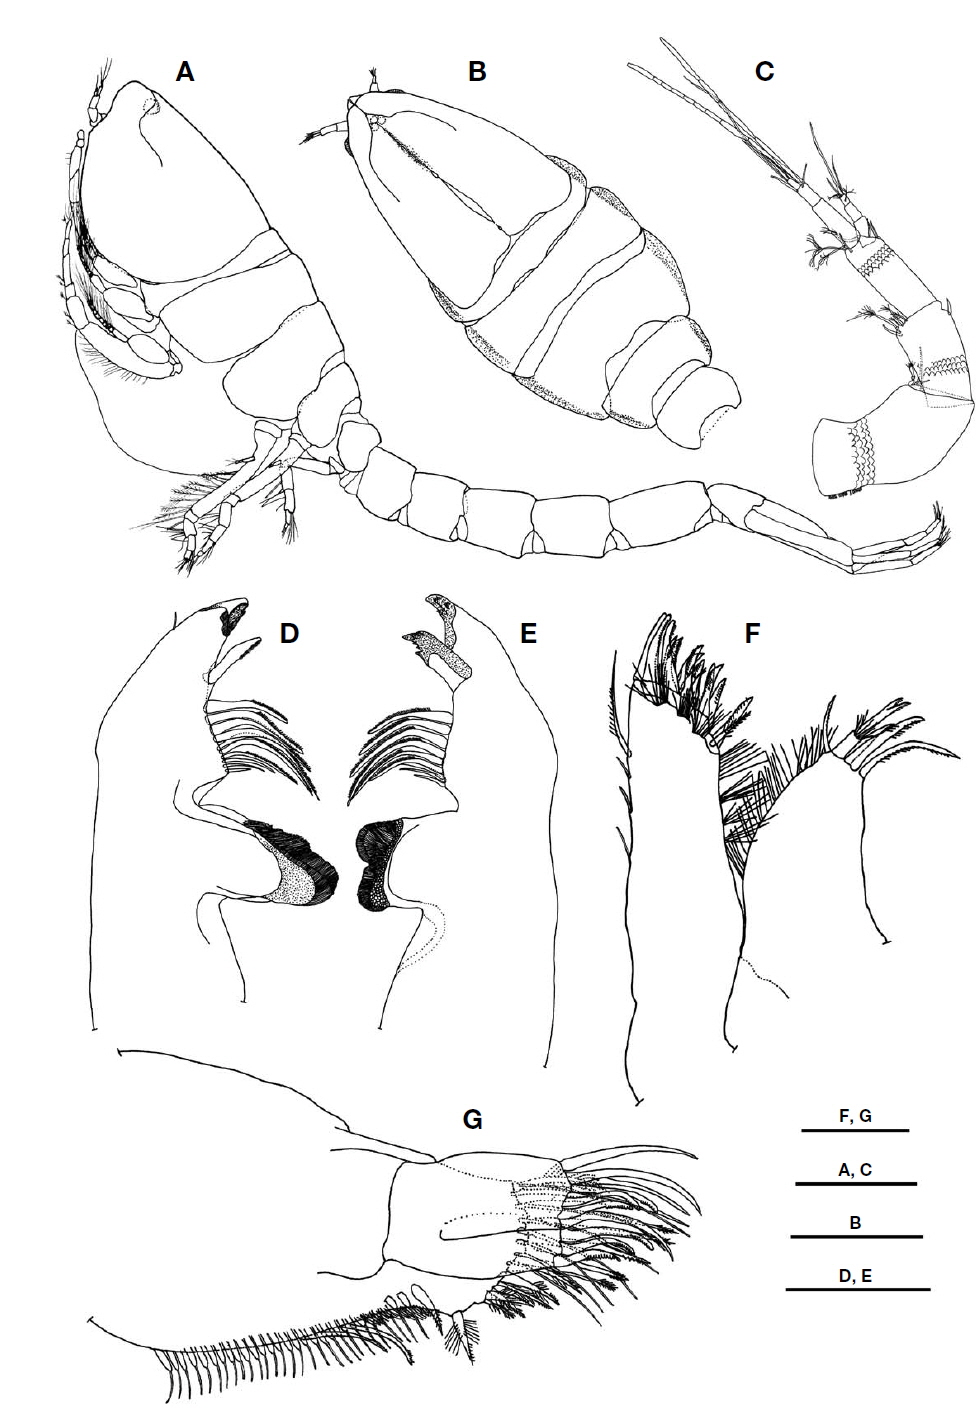 Lamprops carinatus Hart, 1930, female, 7.8 mm. A, Habitus, lateral; B, Cephalothorax, dorsal; C, Antenna 1; D, Right mandible; E, Left mandible; F, Maxilla 1; G, Maxilla 2. Scale bars: A, B=1.0 mm, C-E, G=0.1 mm, F=0.05 mm.